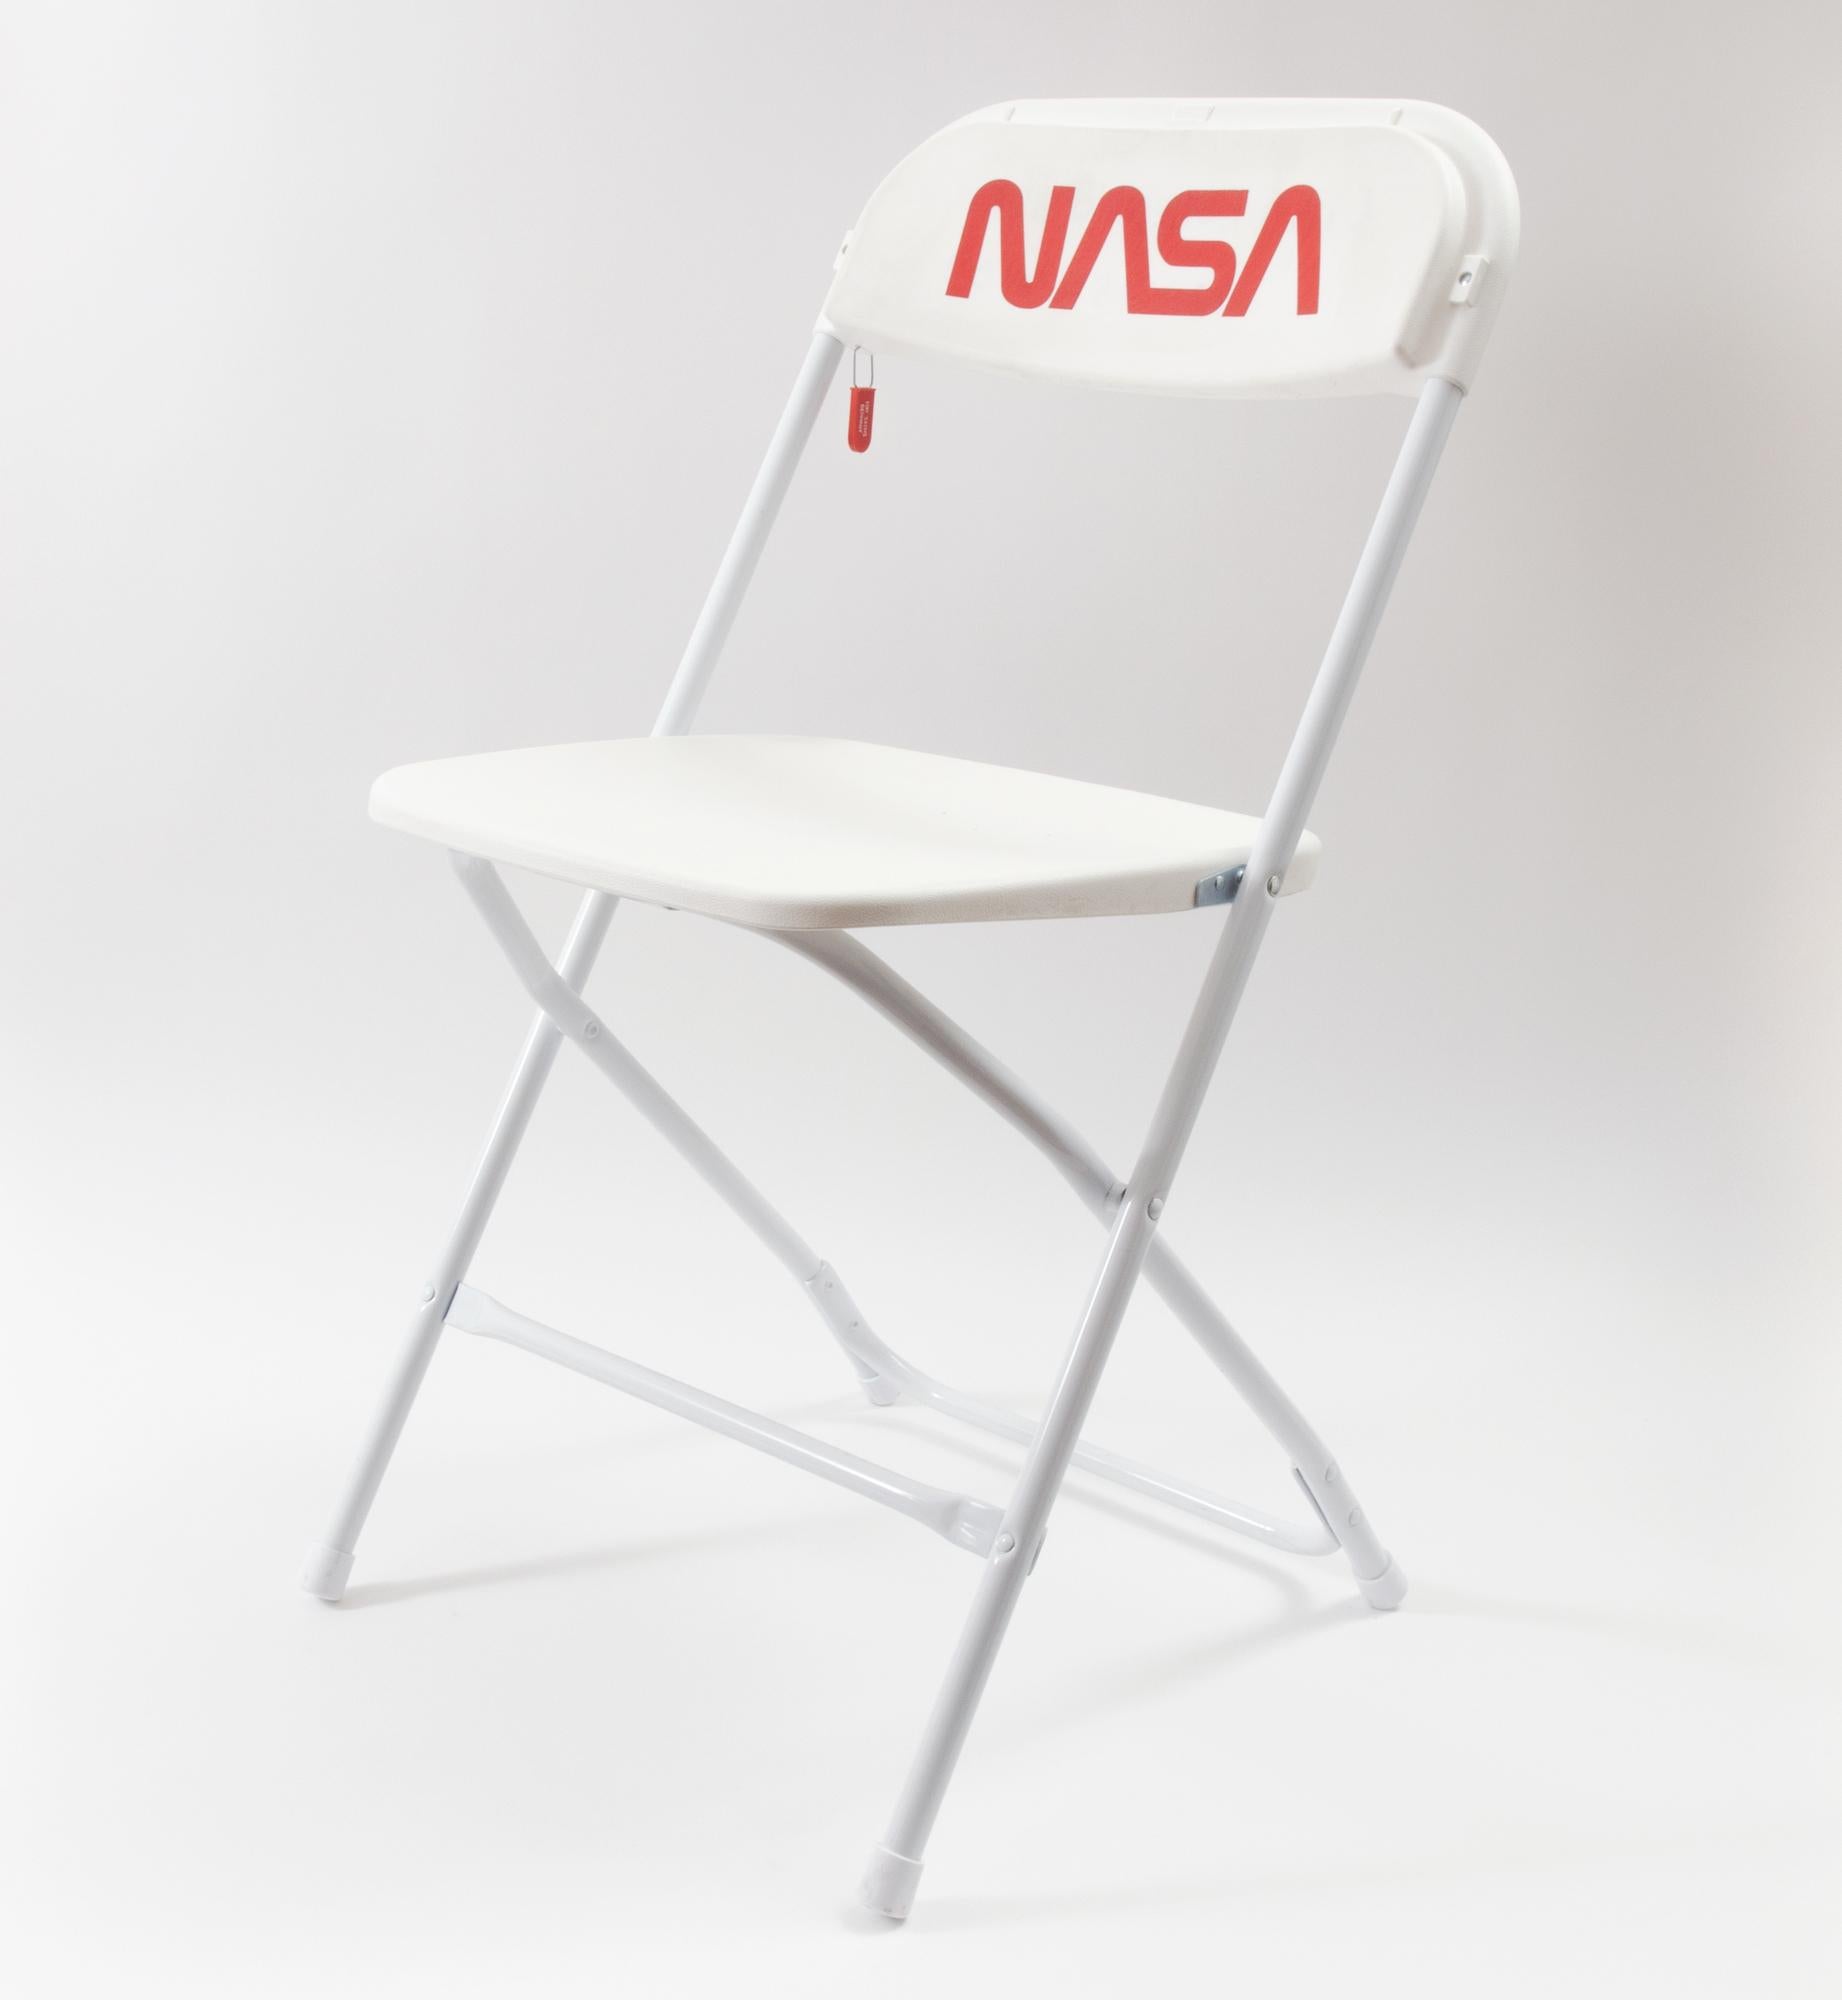 Tom Sachs Figurative Sculpture - NASA Chair (Space Program: Rare Earths), Contemporary Art